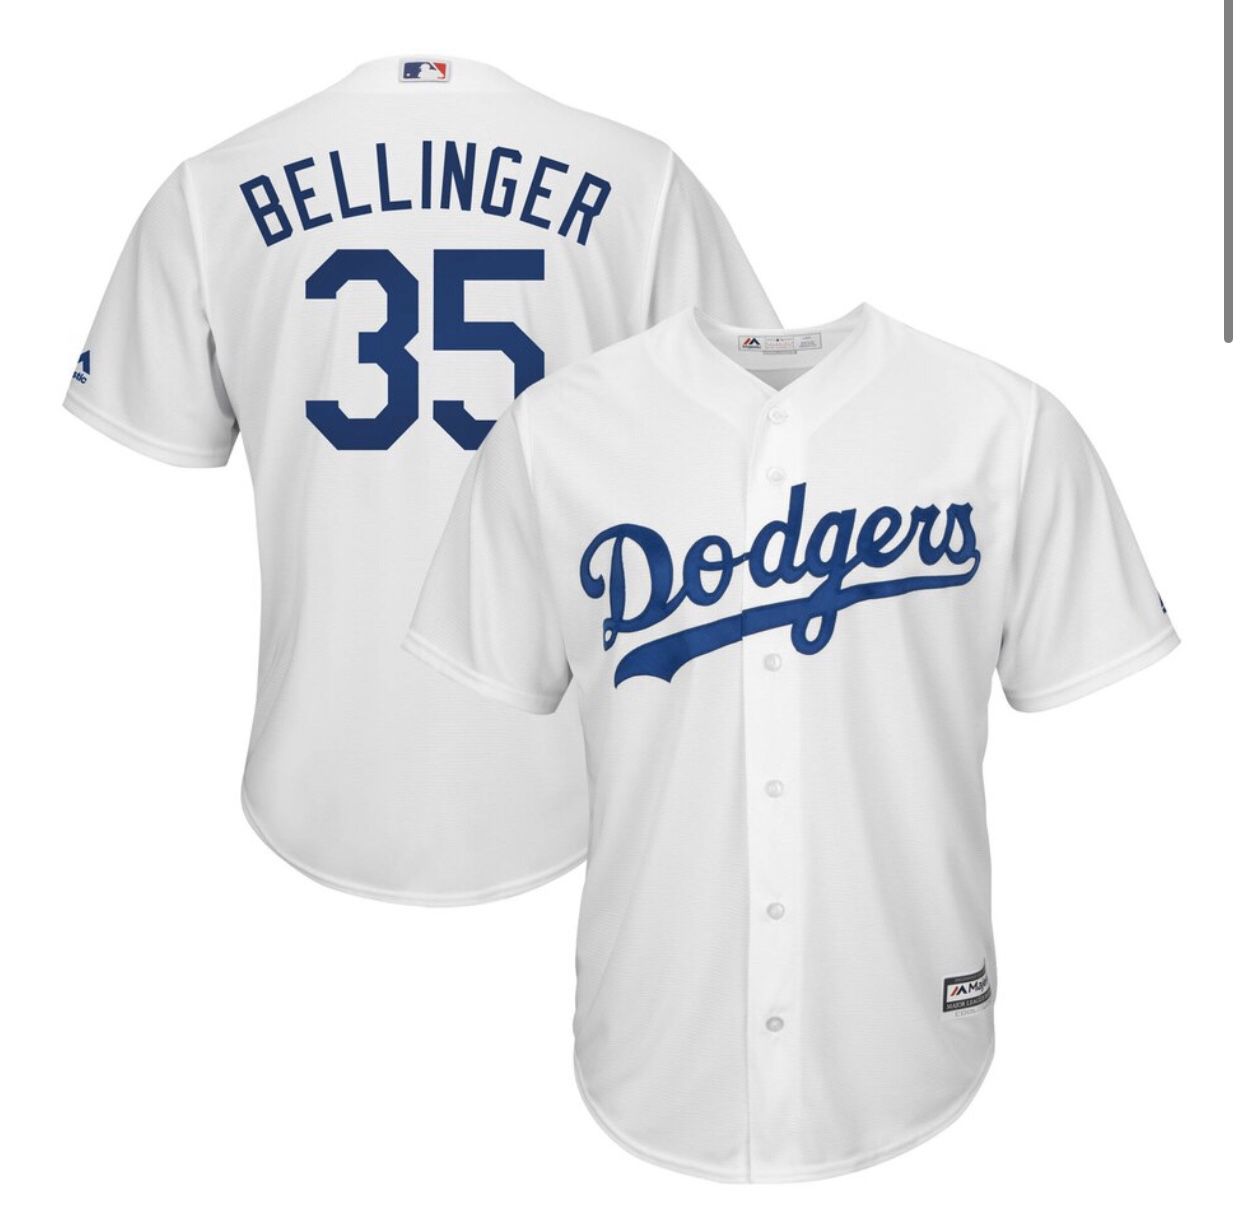 Cody Bellinger Dodgers